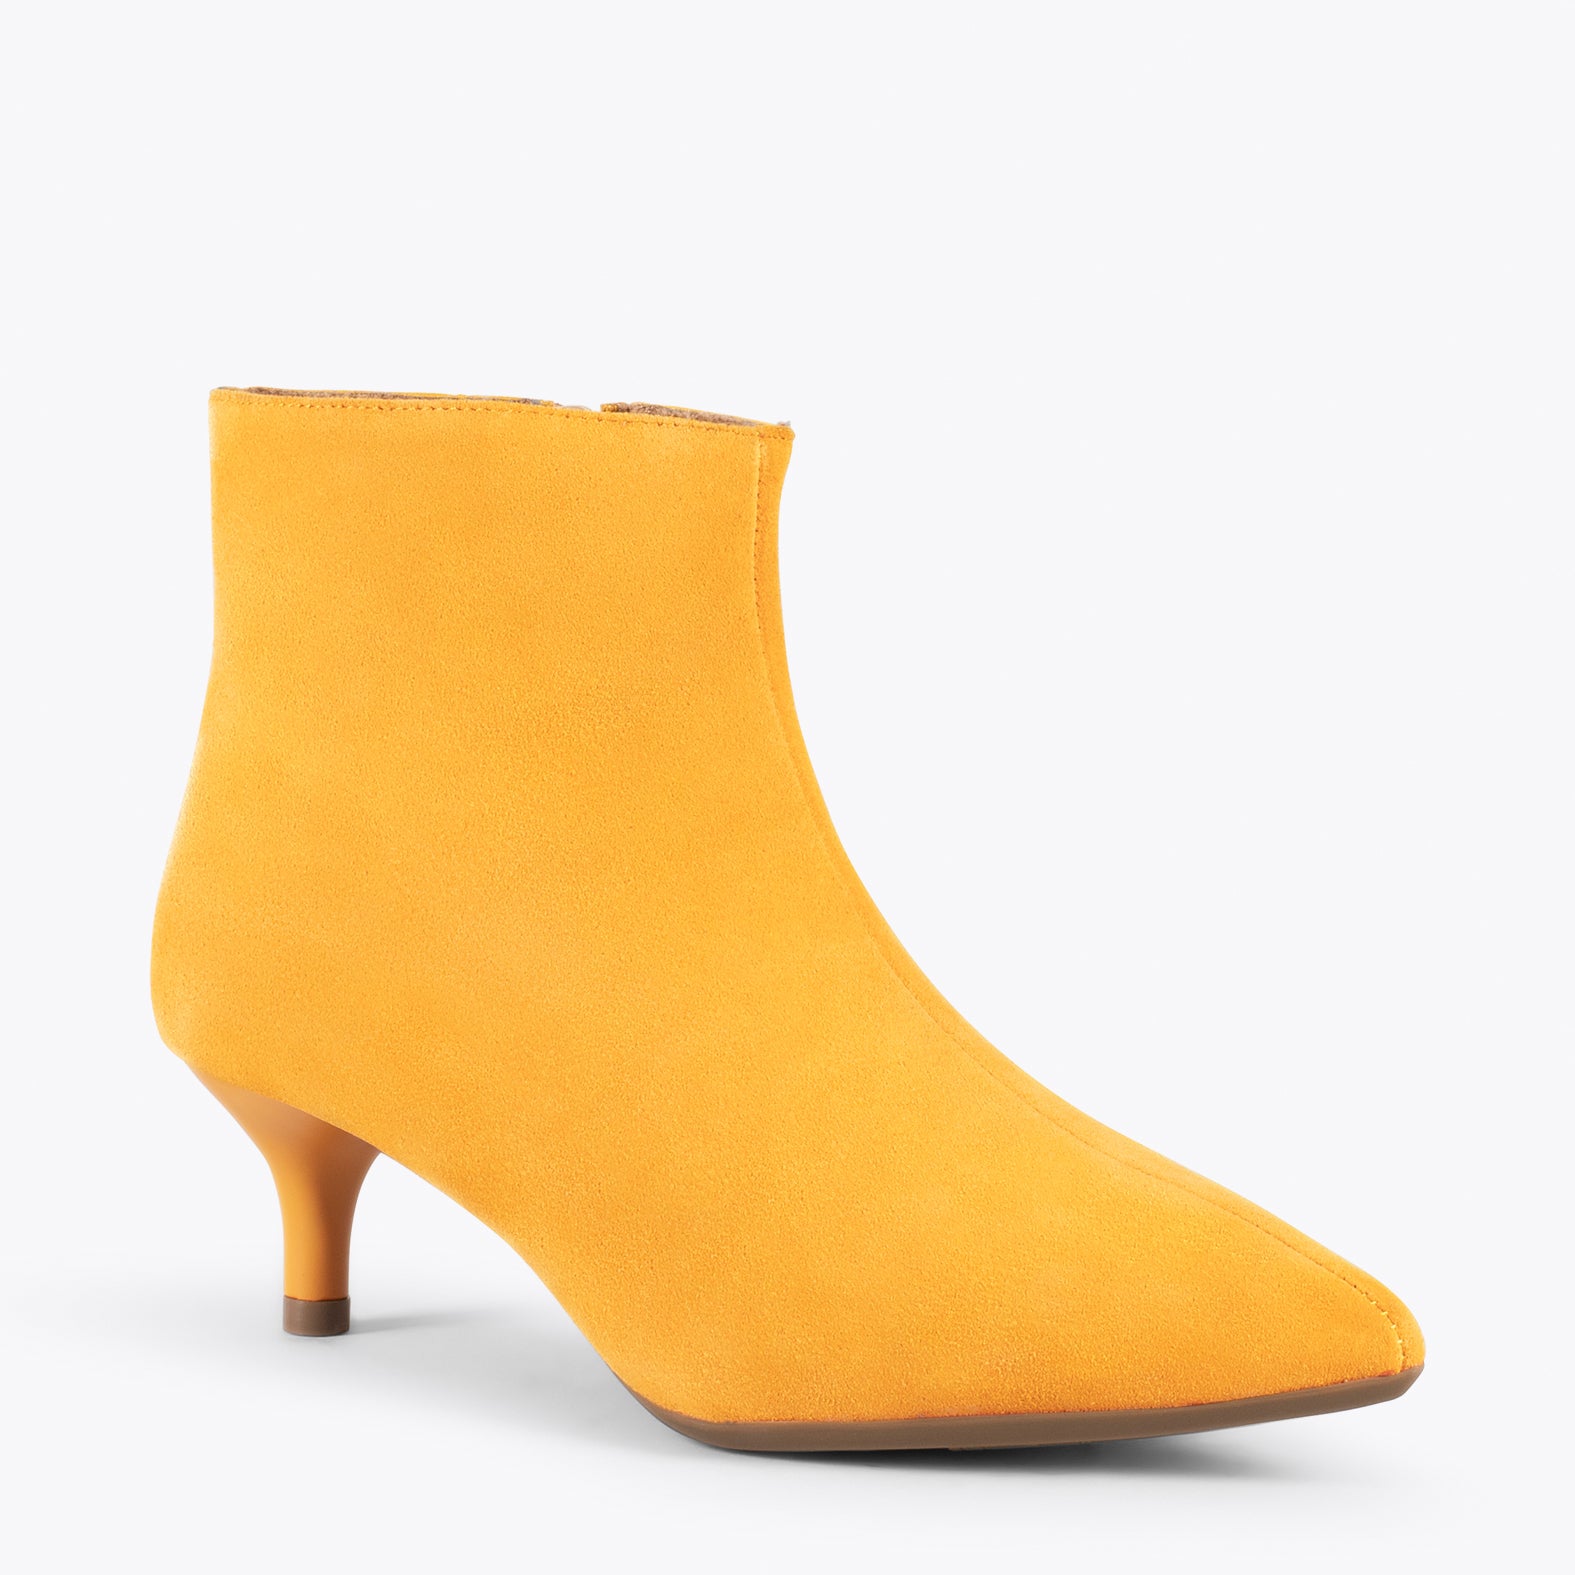 OUTFIT – YELLOW elegant low heel booties